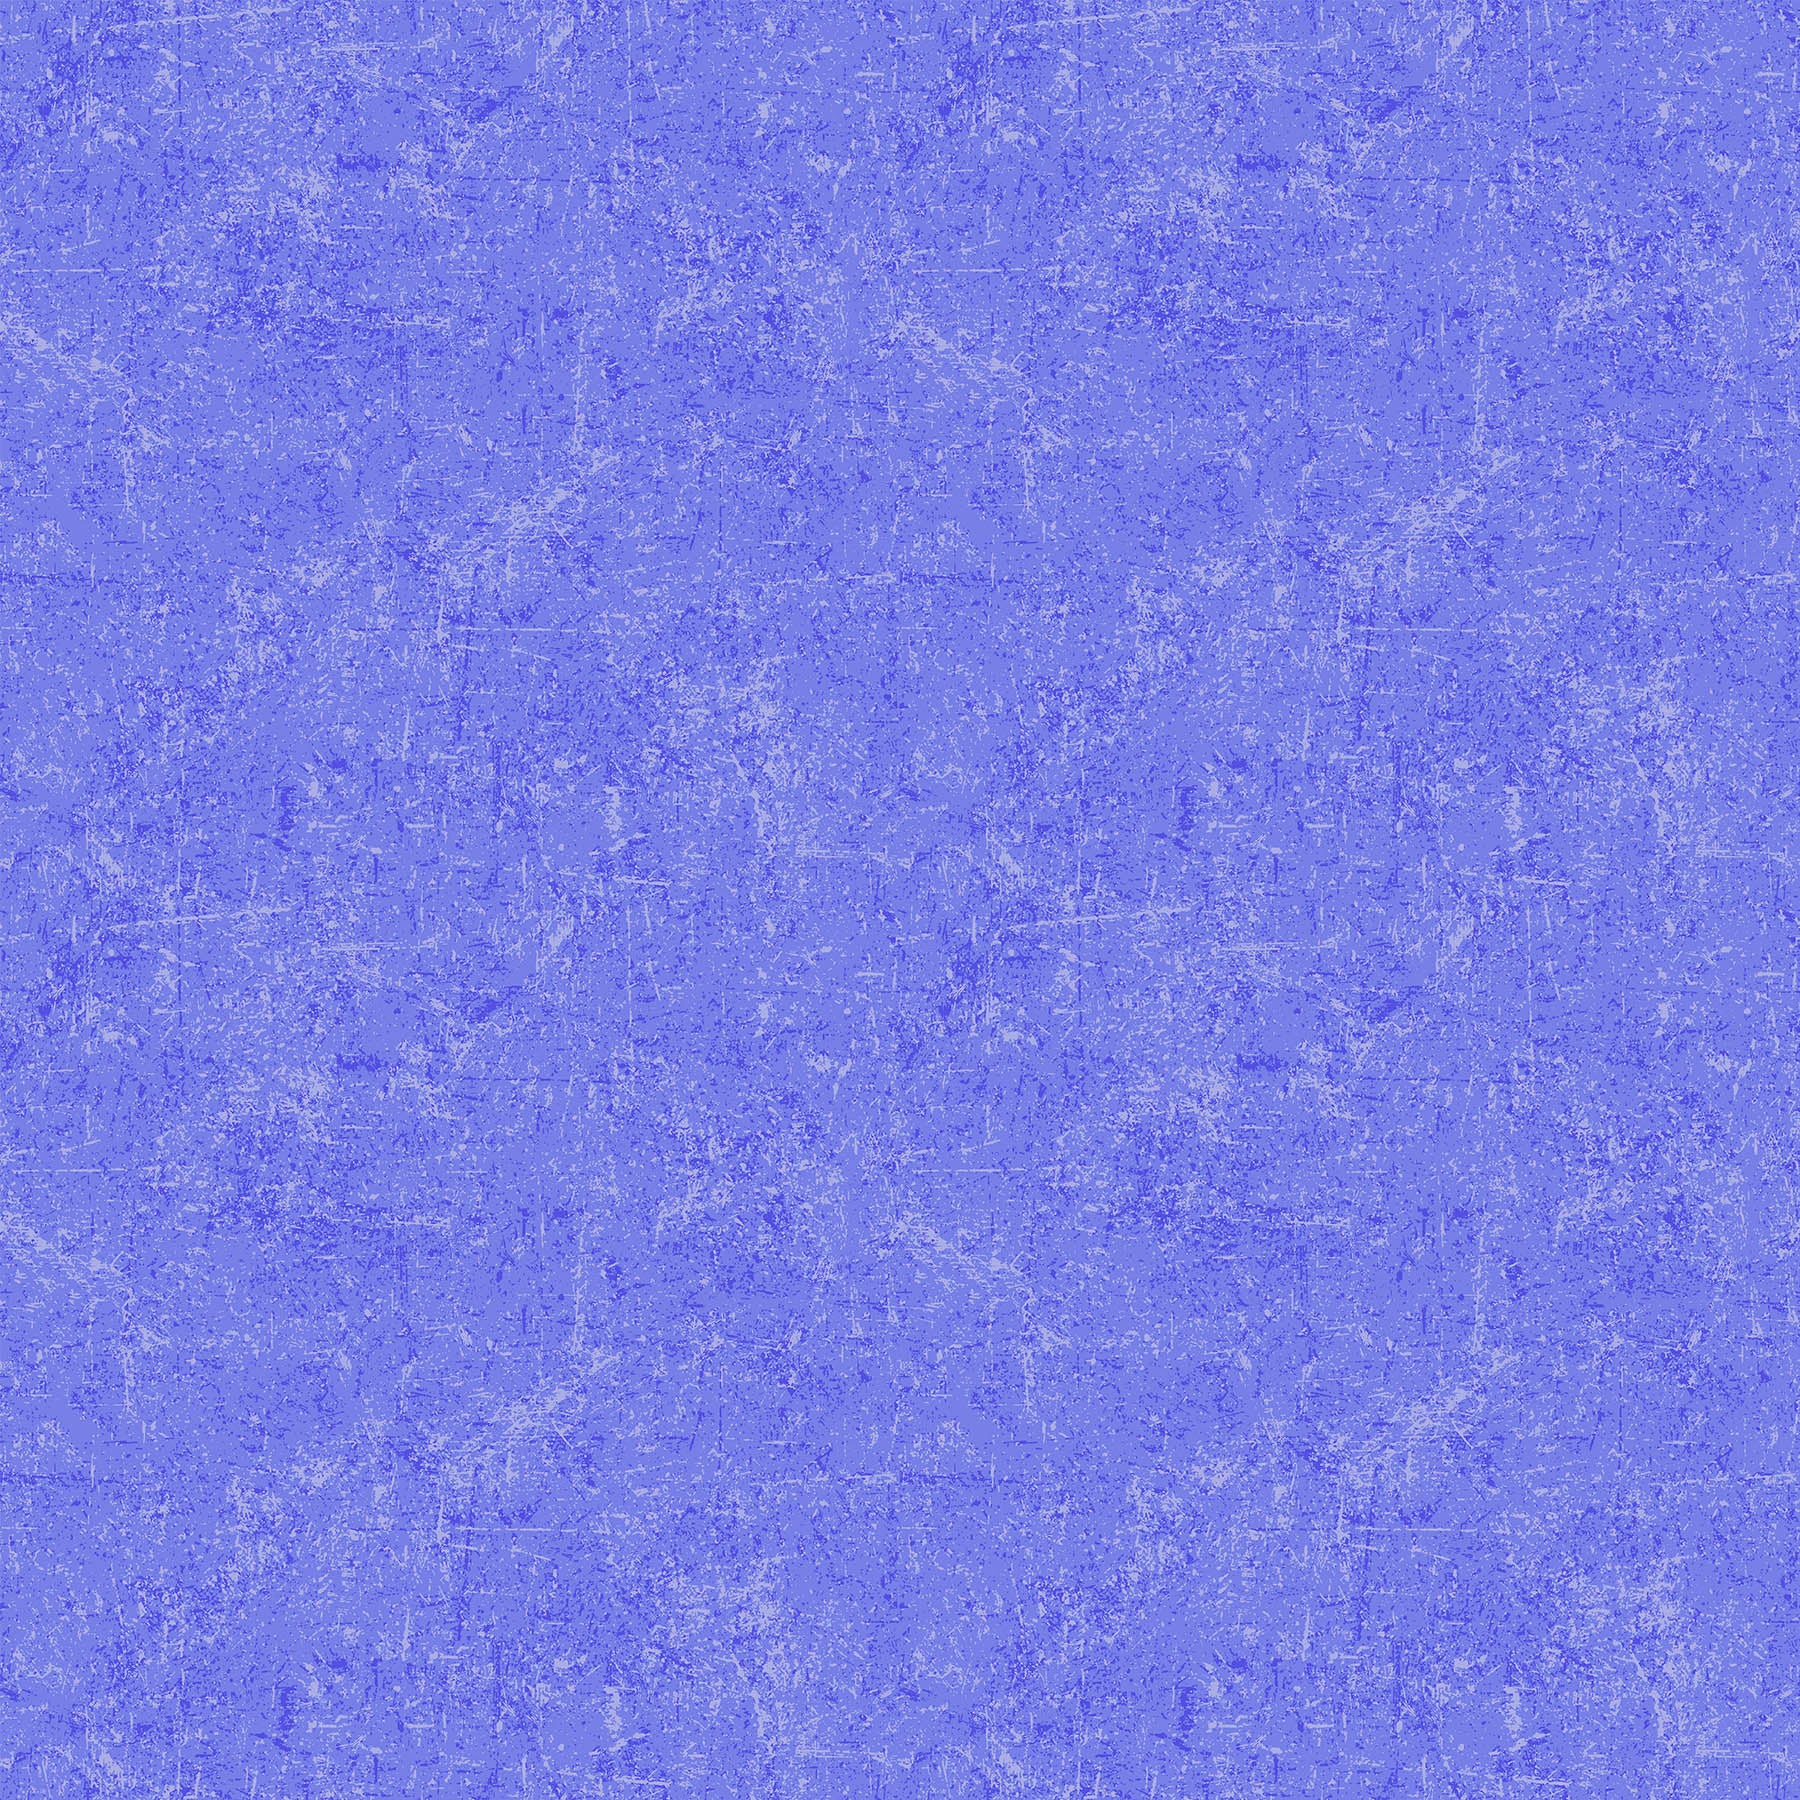 Glisten Quilt Fabric - Blender in Periwinkle Blue - P10091-81